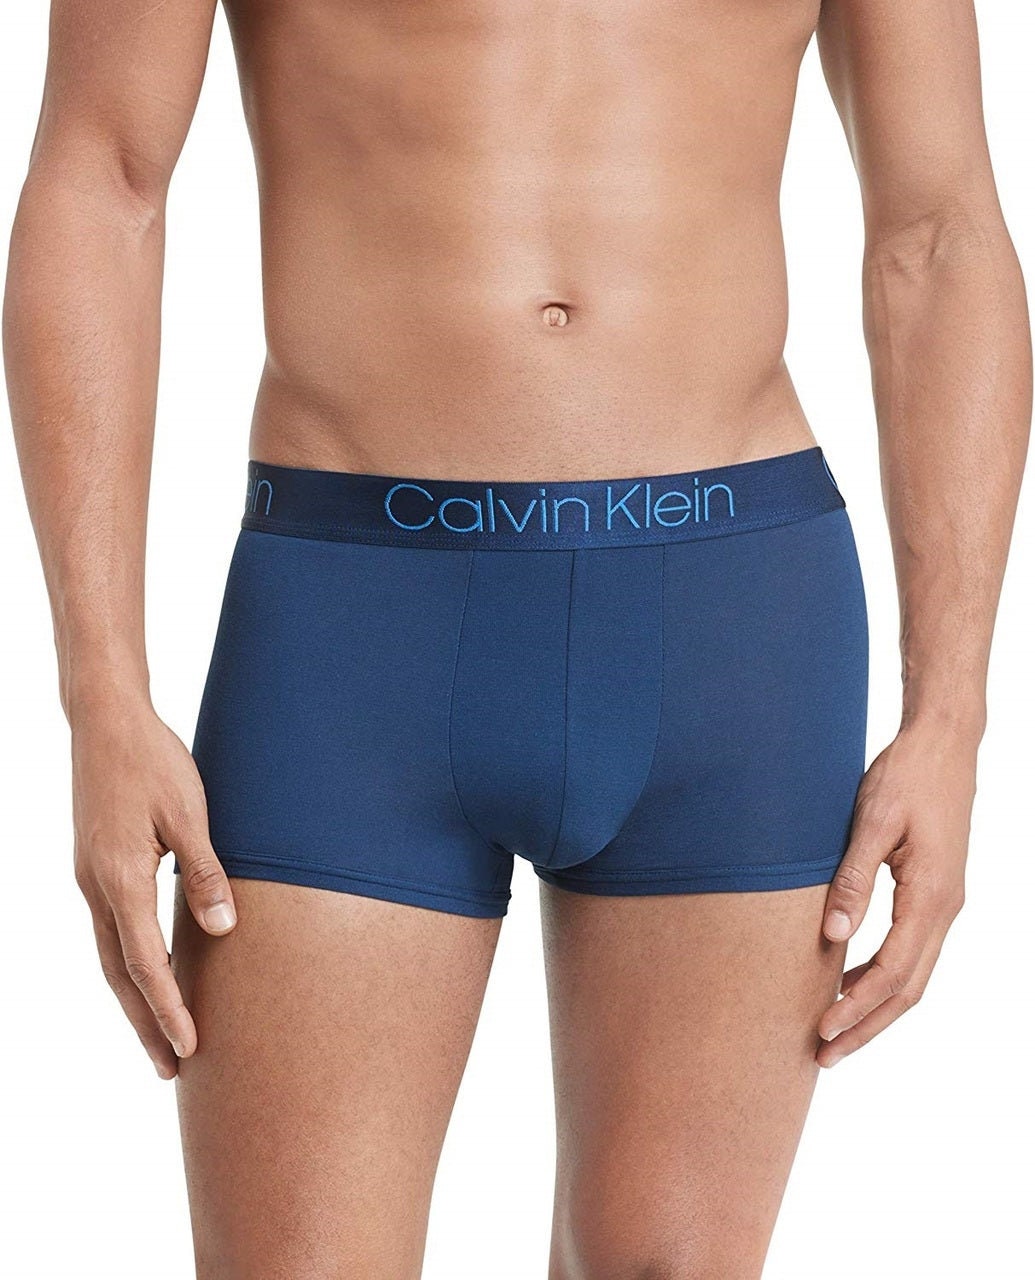 Calvin Klein Men's Low Rise Boxer Trunks